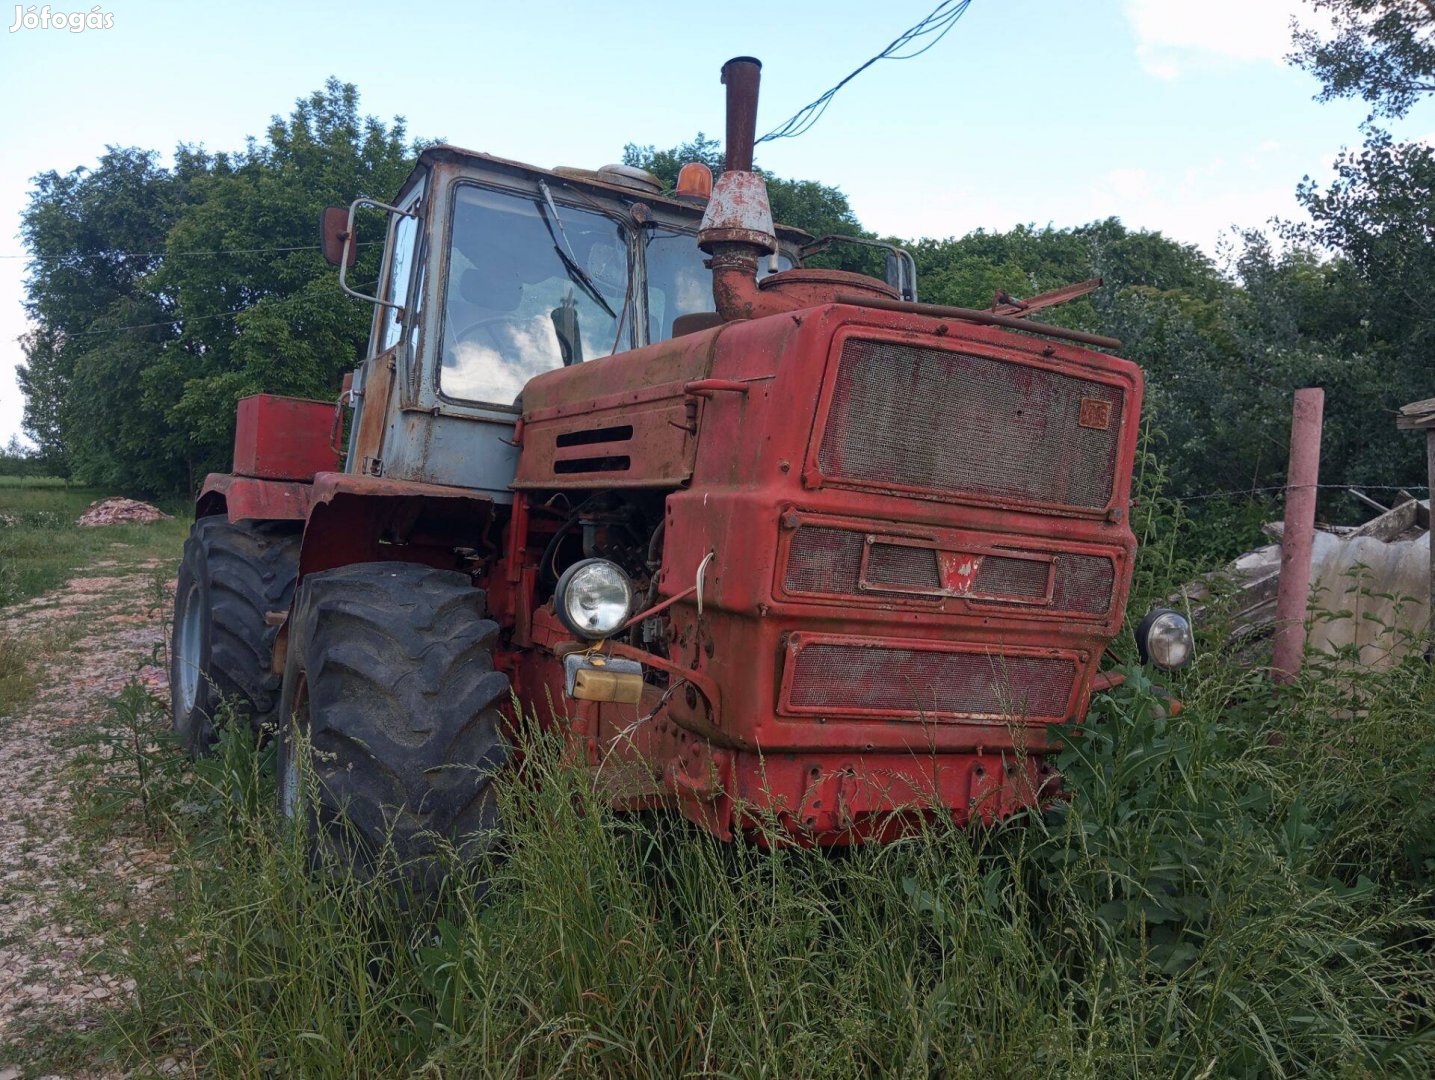 Eladó v. Csere T 150 traktor